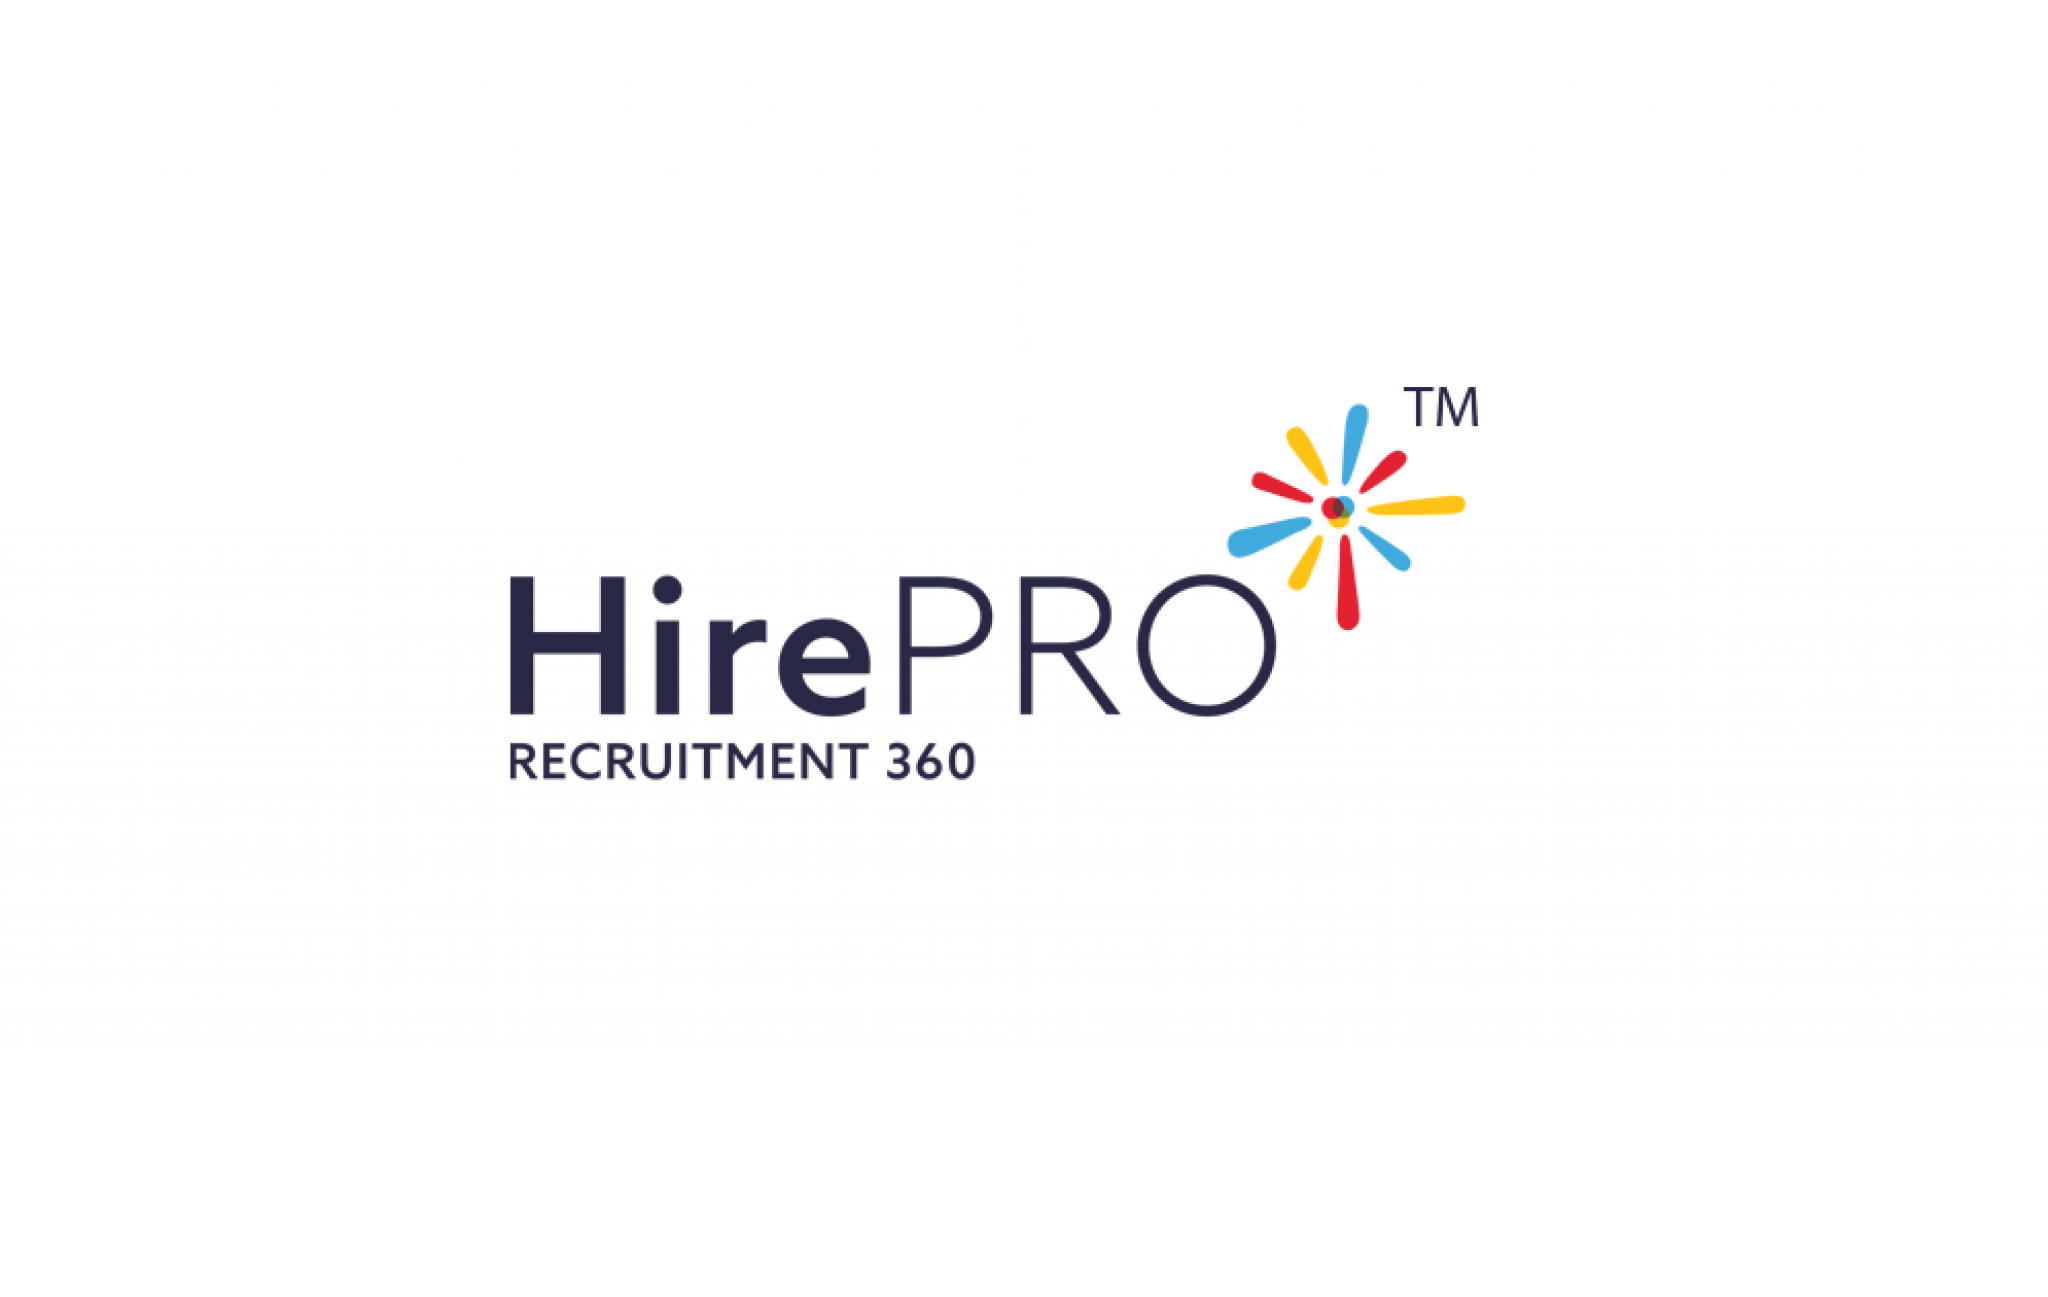 HirePro Complete Recruitment Solution Ansefy Prepare